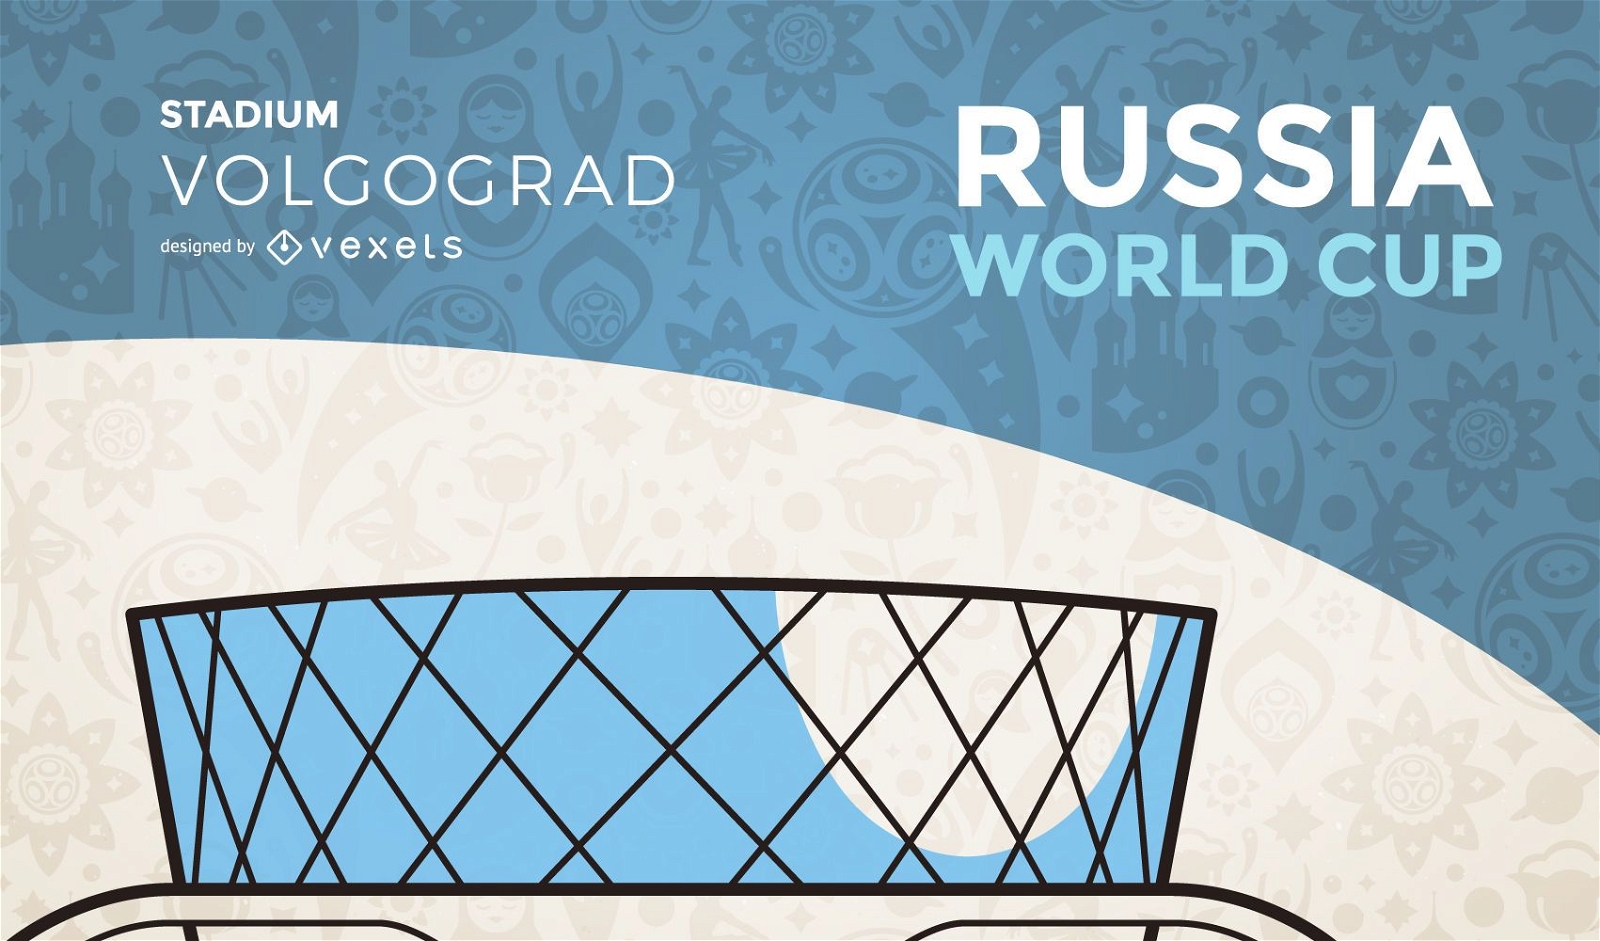 Volgograd world cup stadium